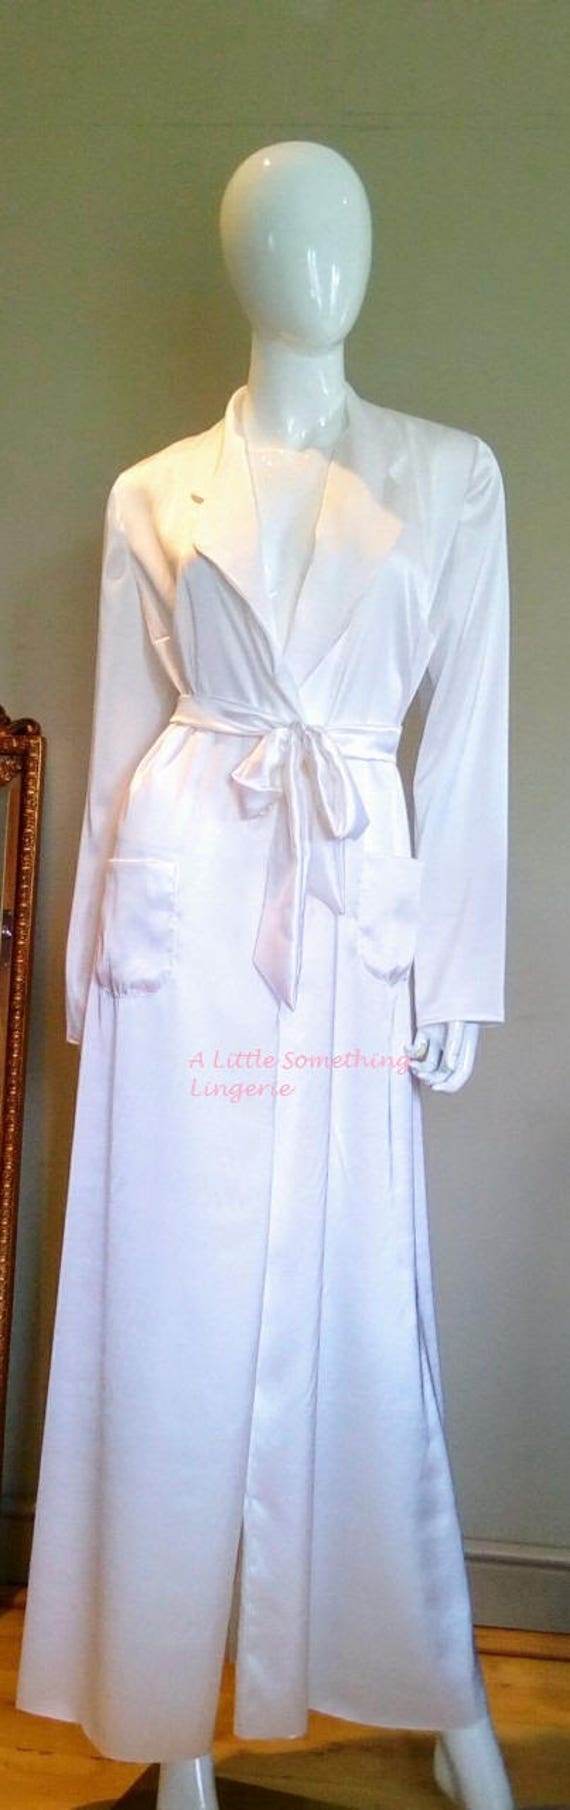 white satin robe uk